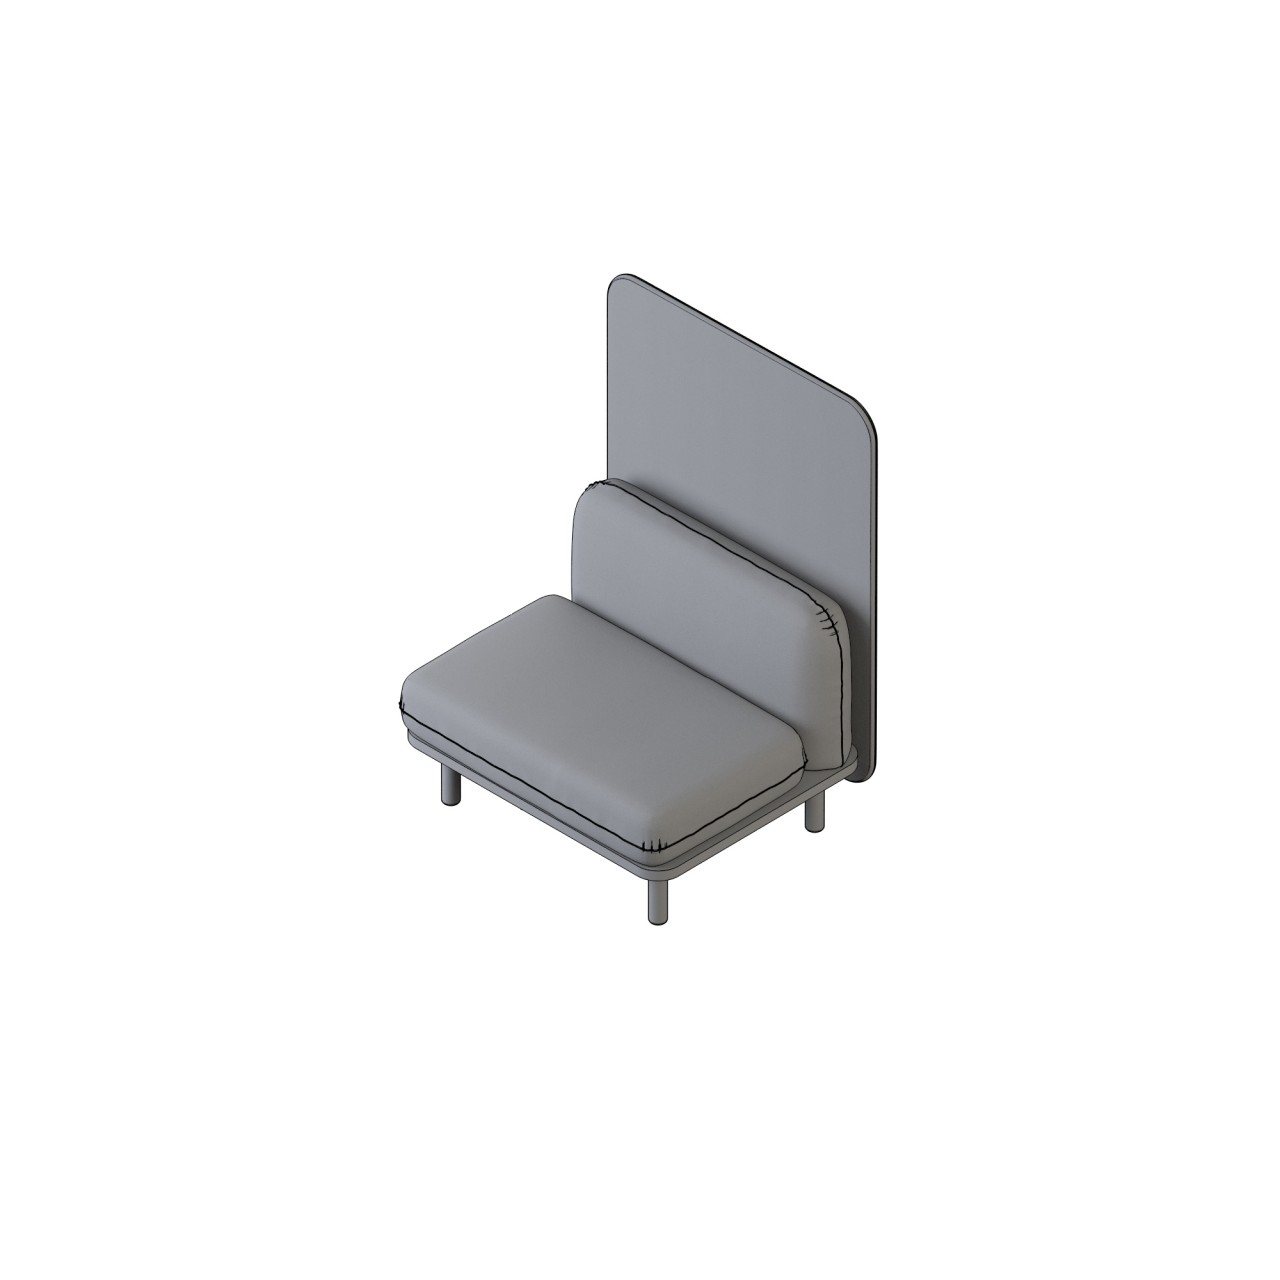 Soft - 24003-B
COM 5 (back 1.75, base 1, seat 2.75, panel 2.75)